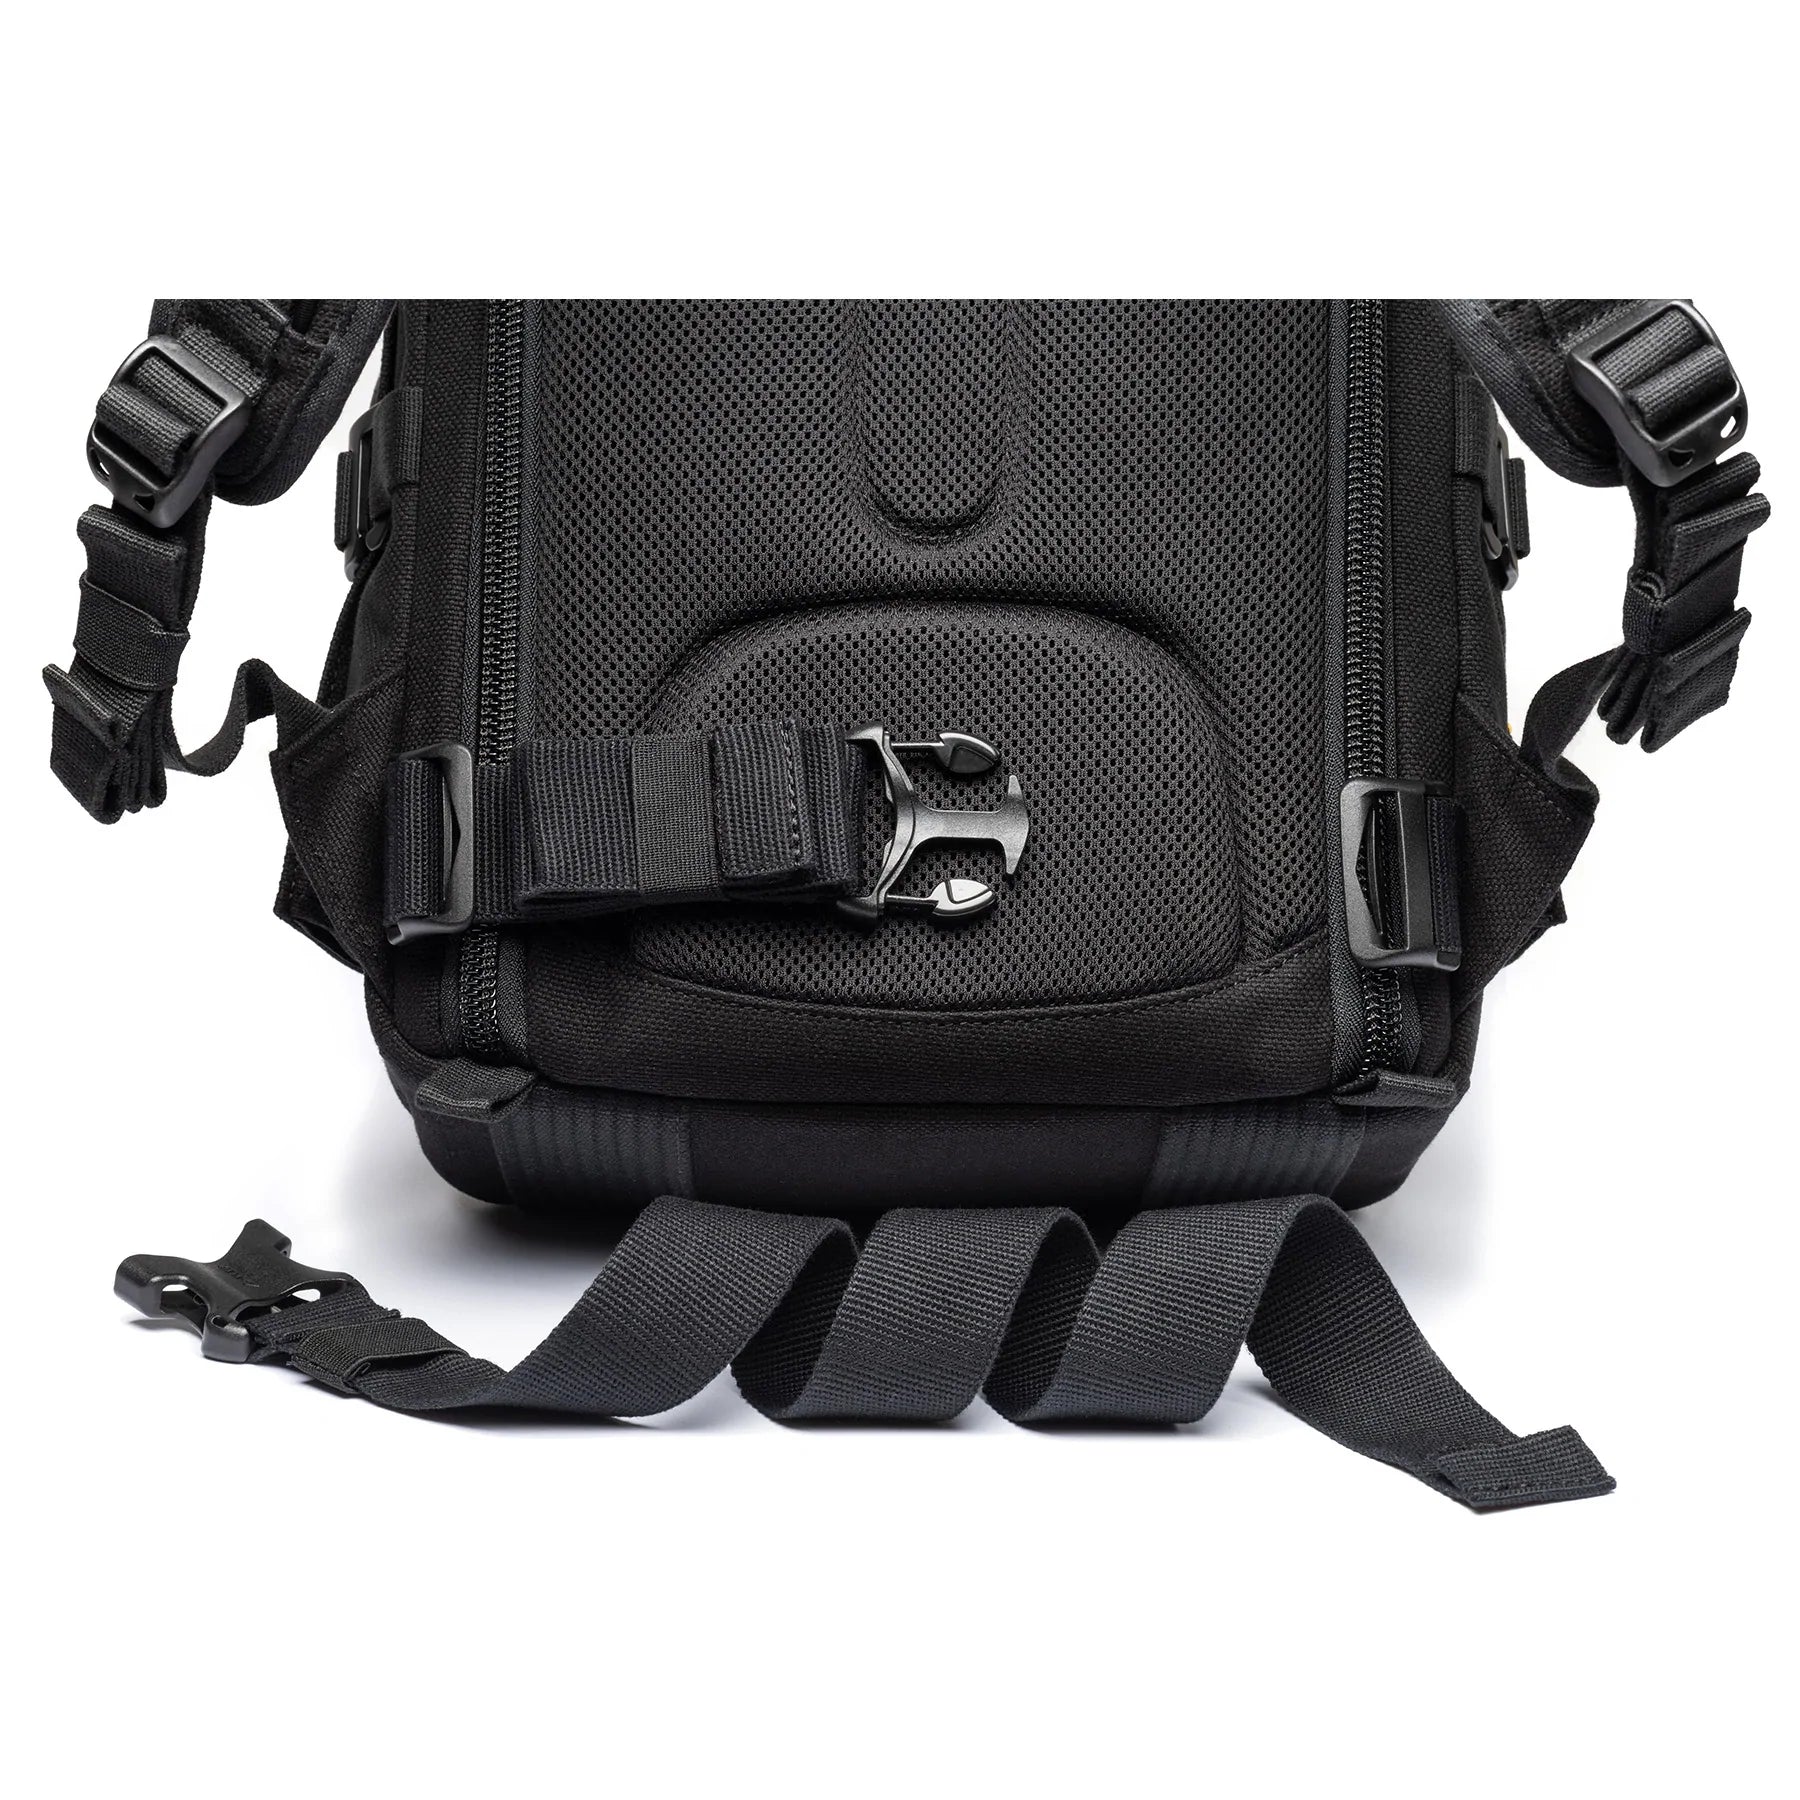 Think Tank Retrospective Camera Backpack 15L - Black